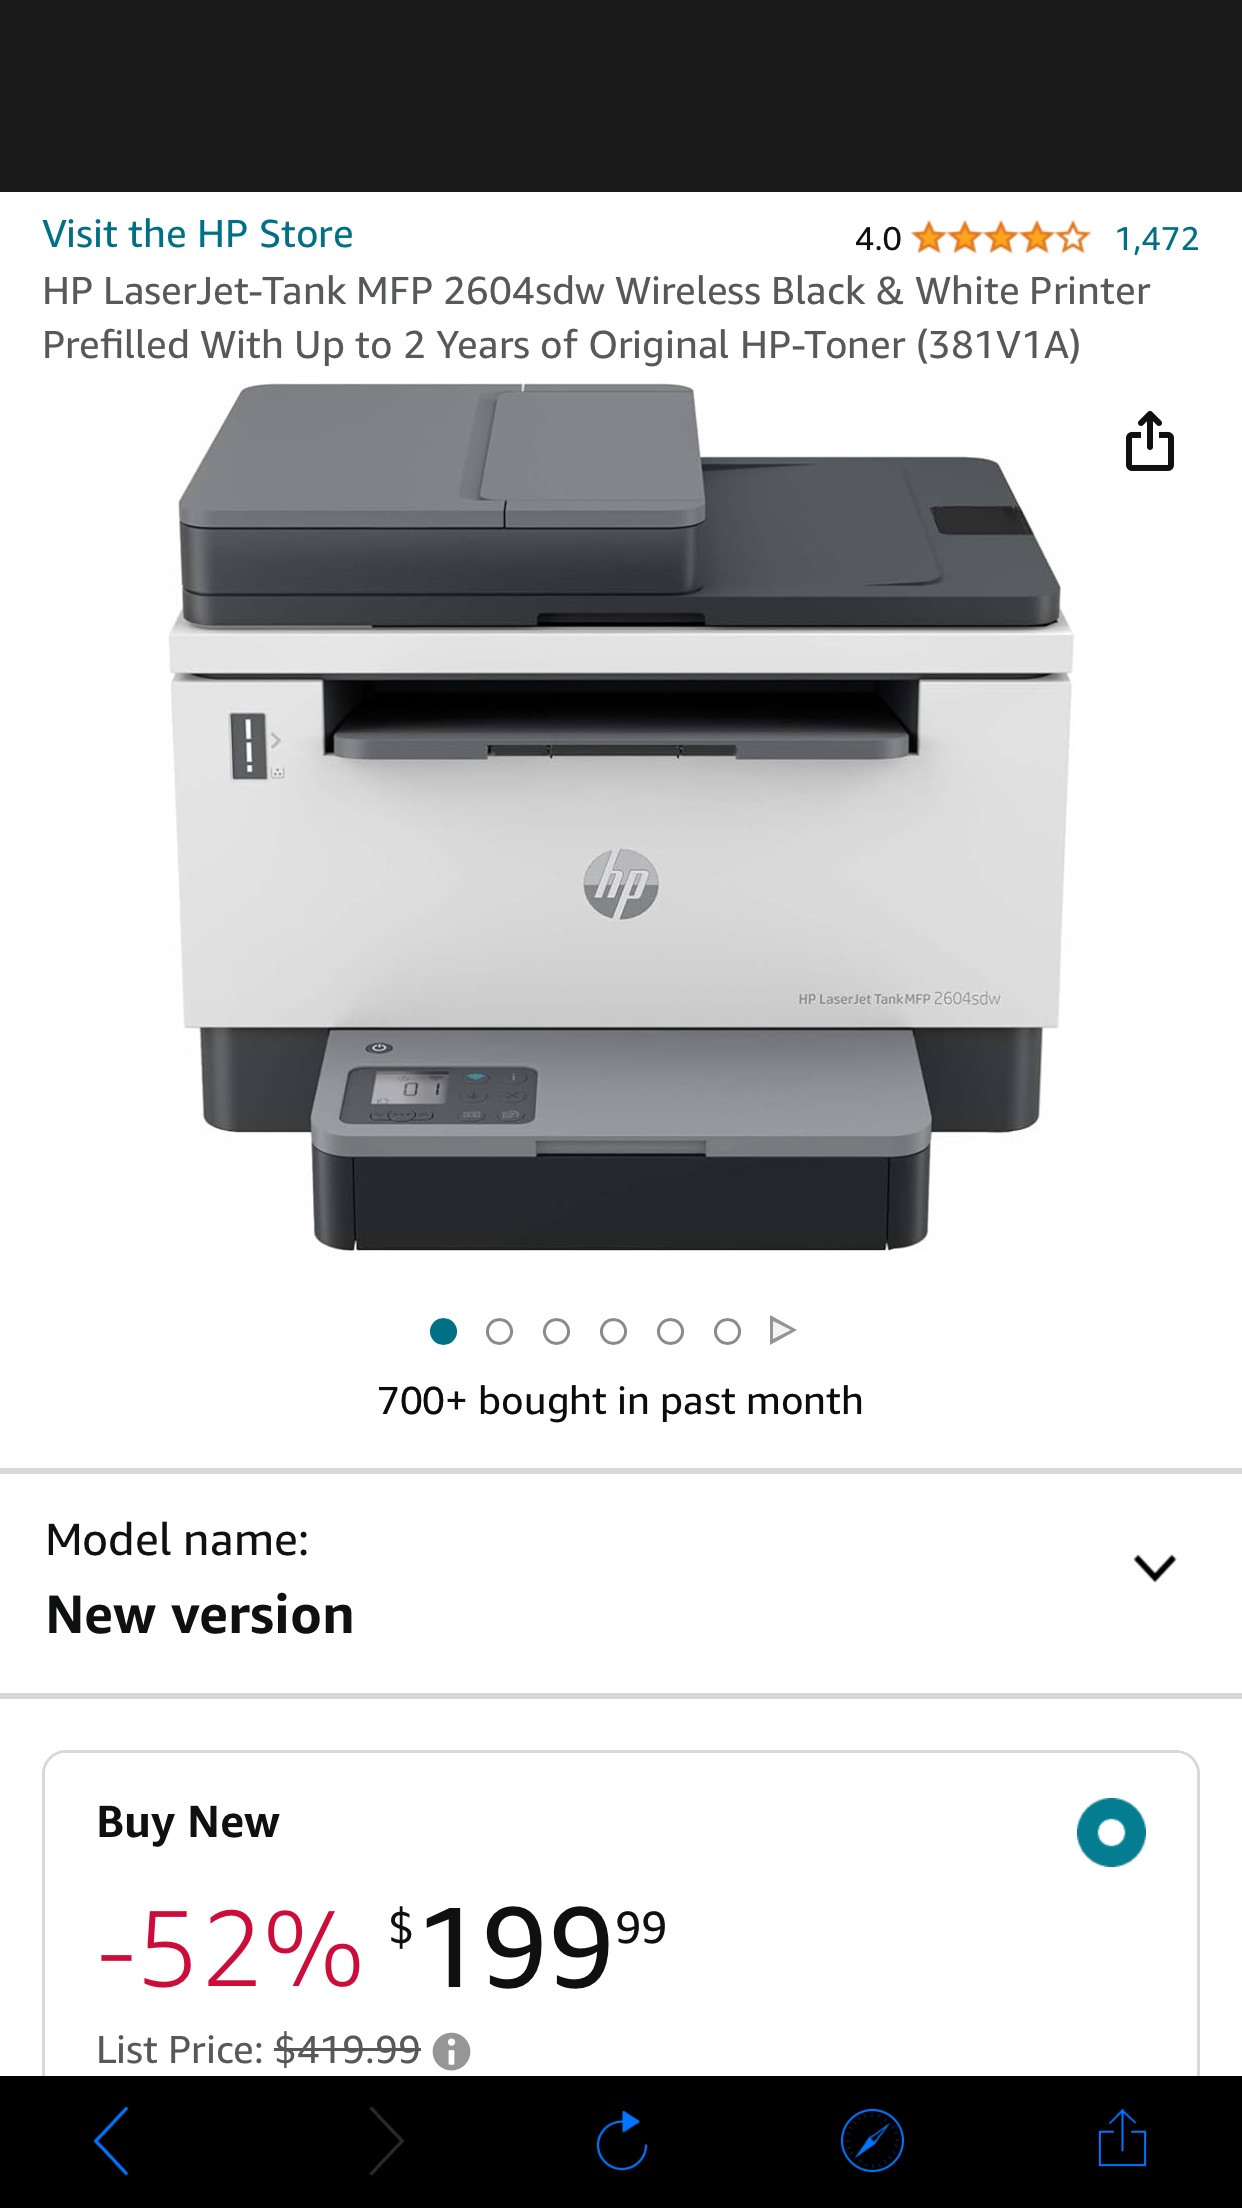 Amazon.com: HP LaserJet-Tank MFP 2604sdw Wireless Black & White Printer Prefilled With Up to 2 Years of Original HP-Toner (381V1A)